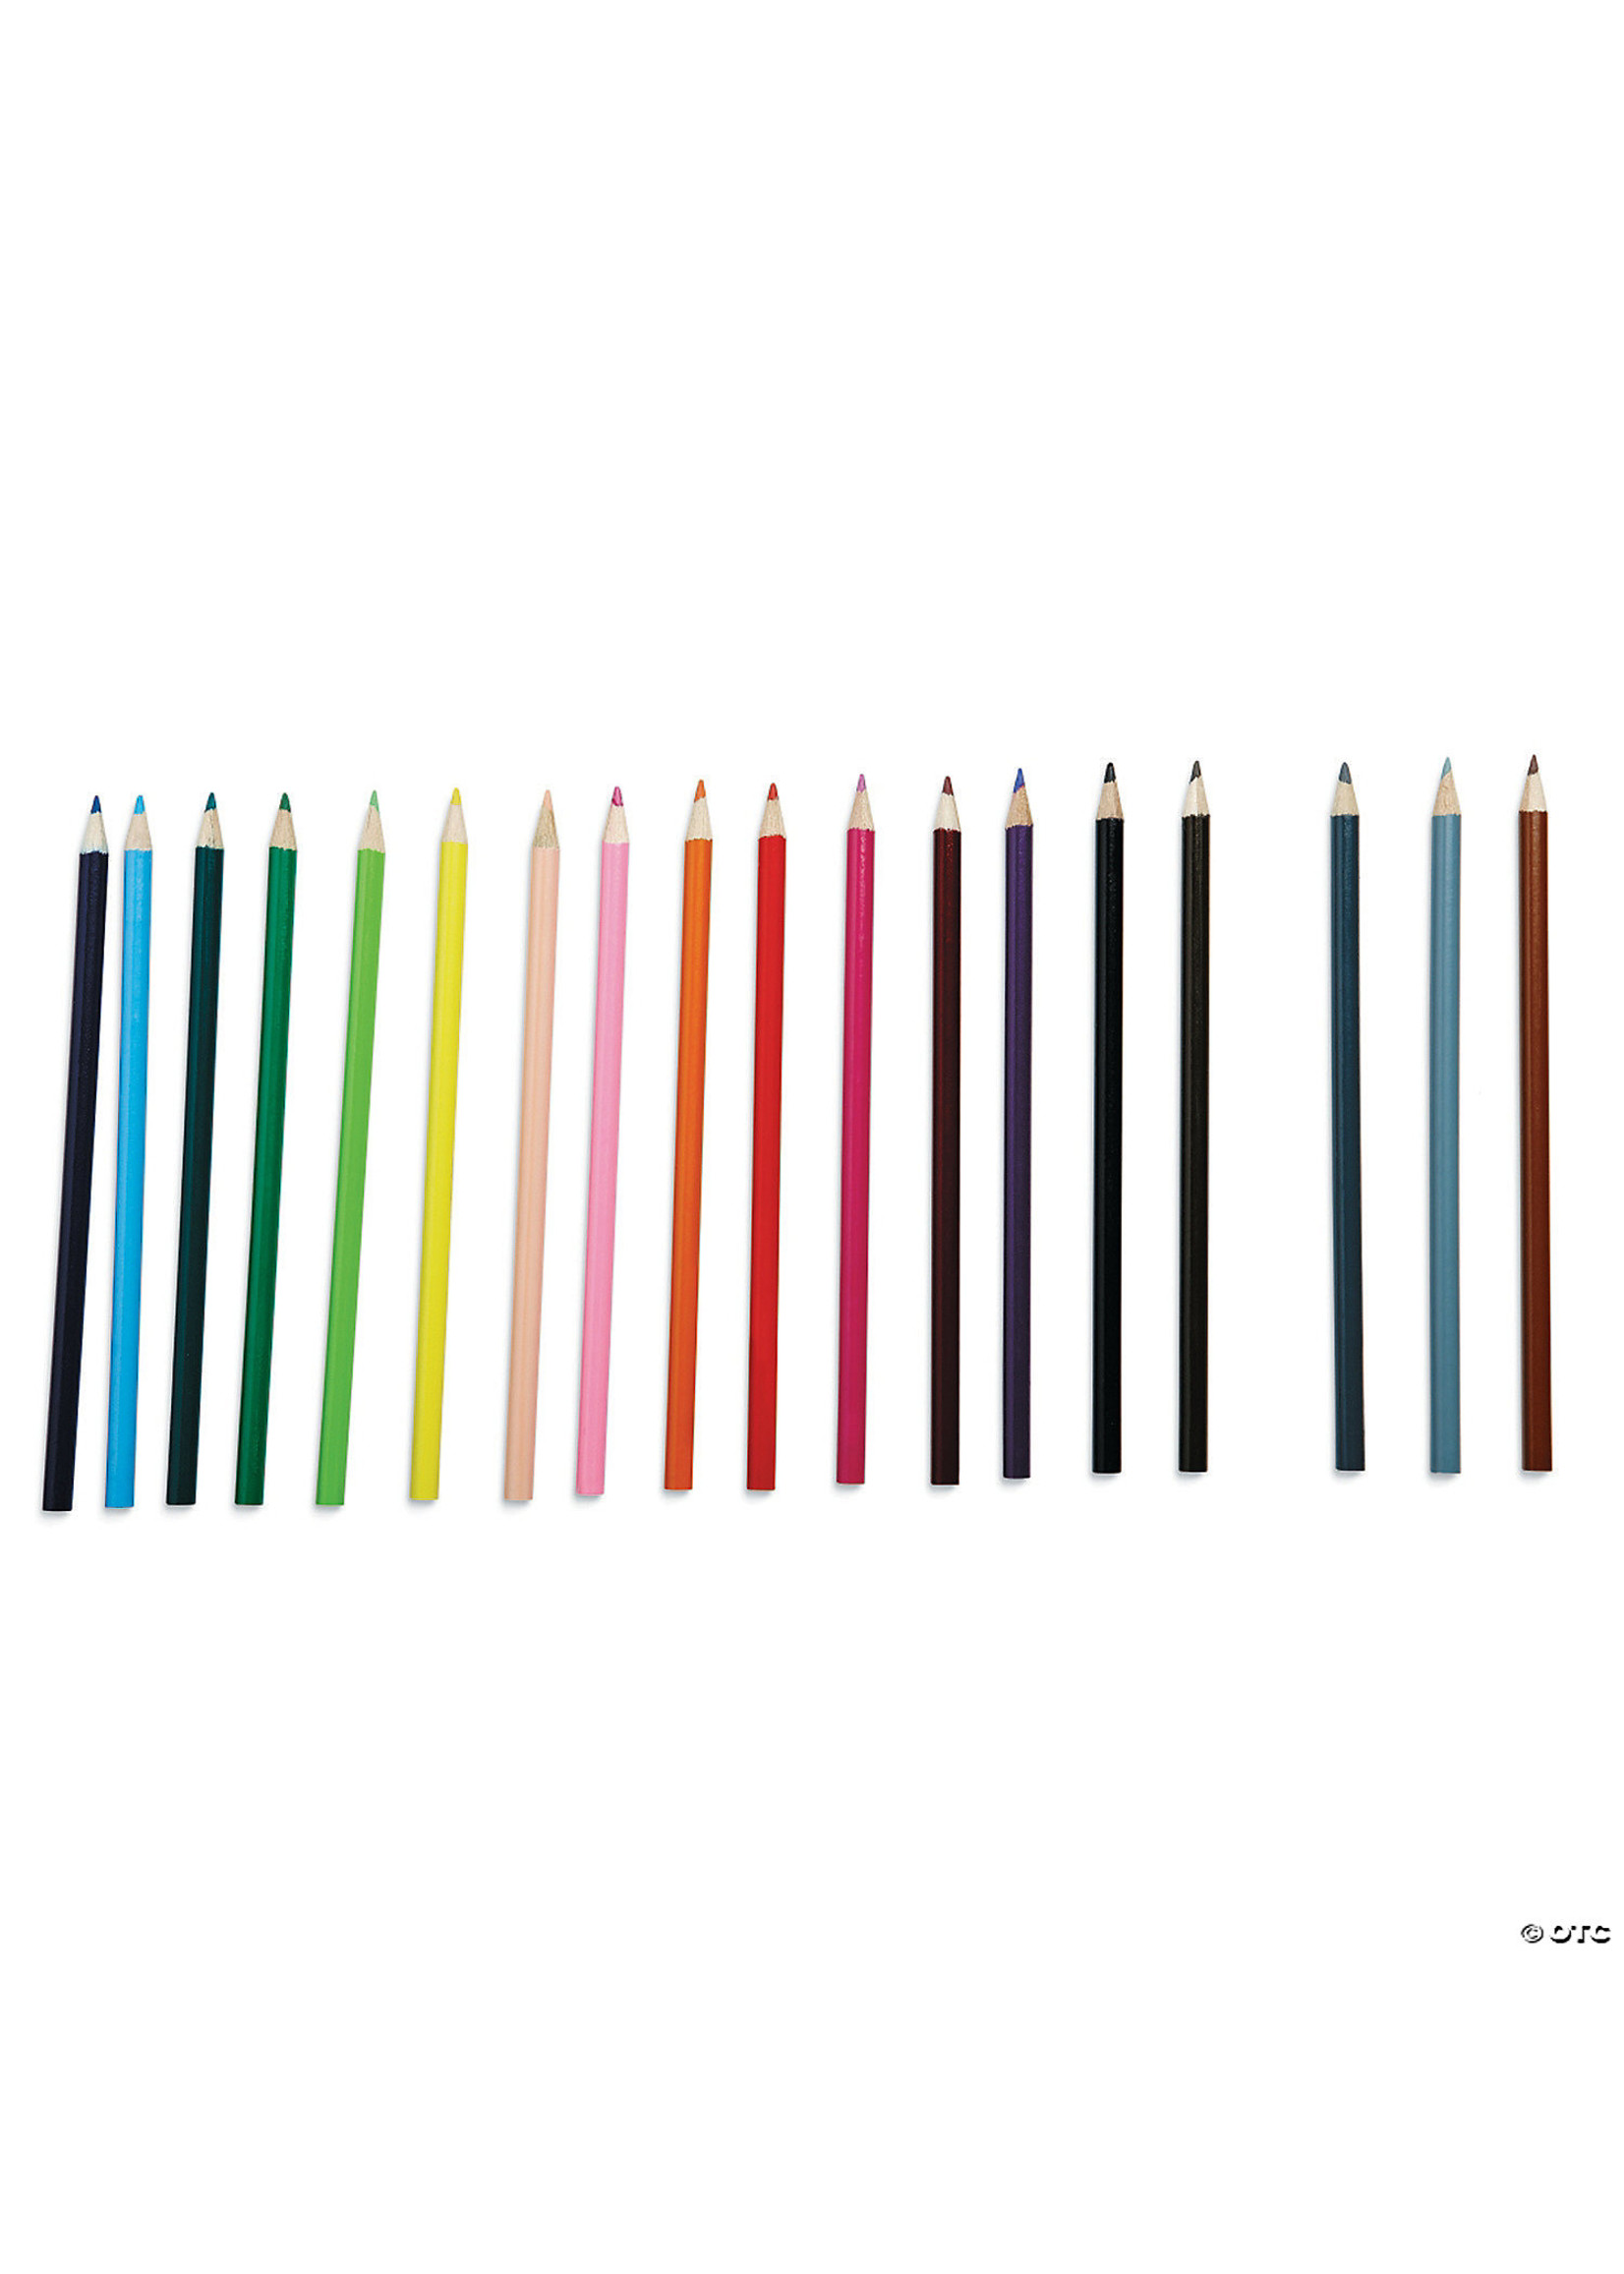 Mindware 18 Colored Pencils